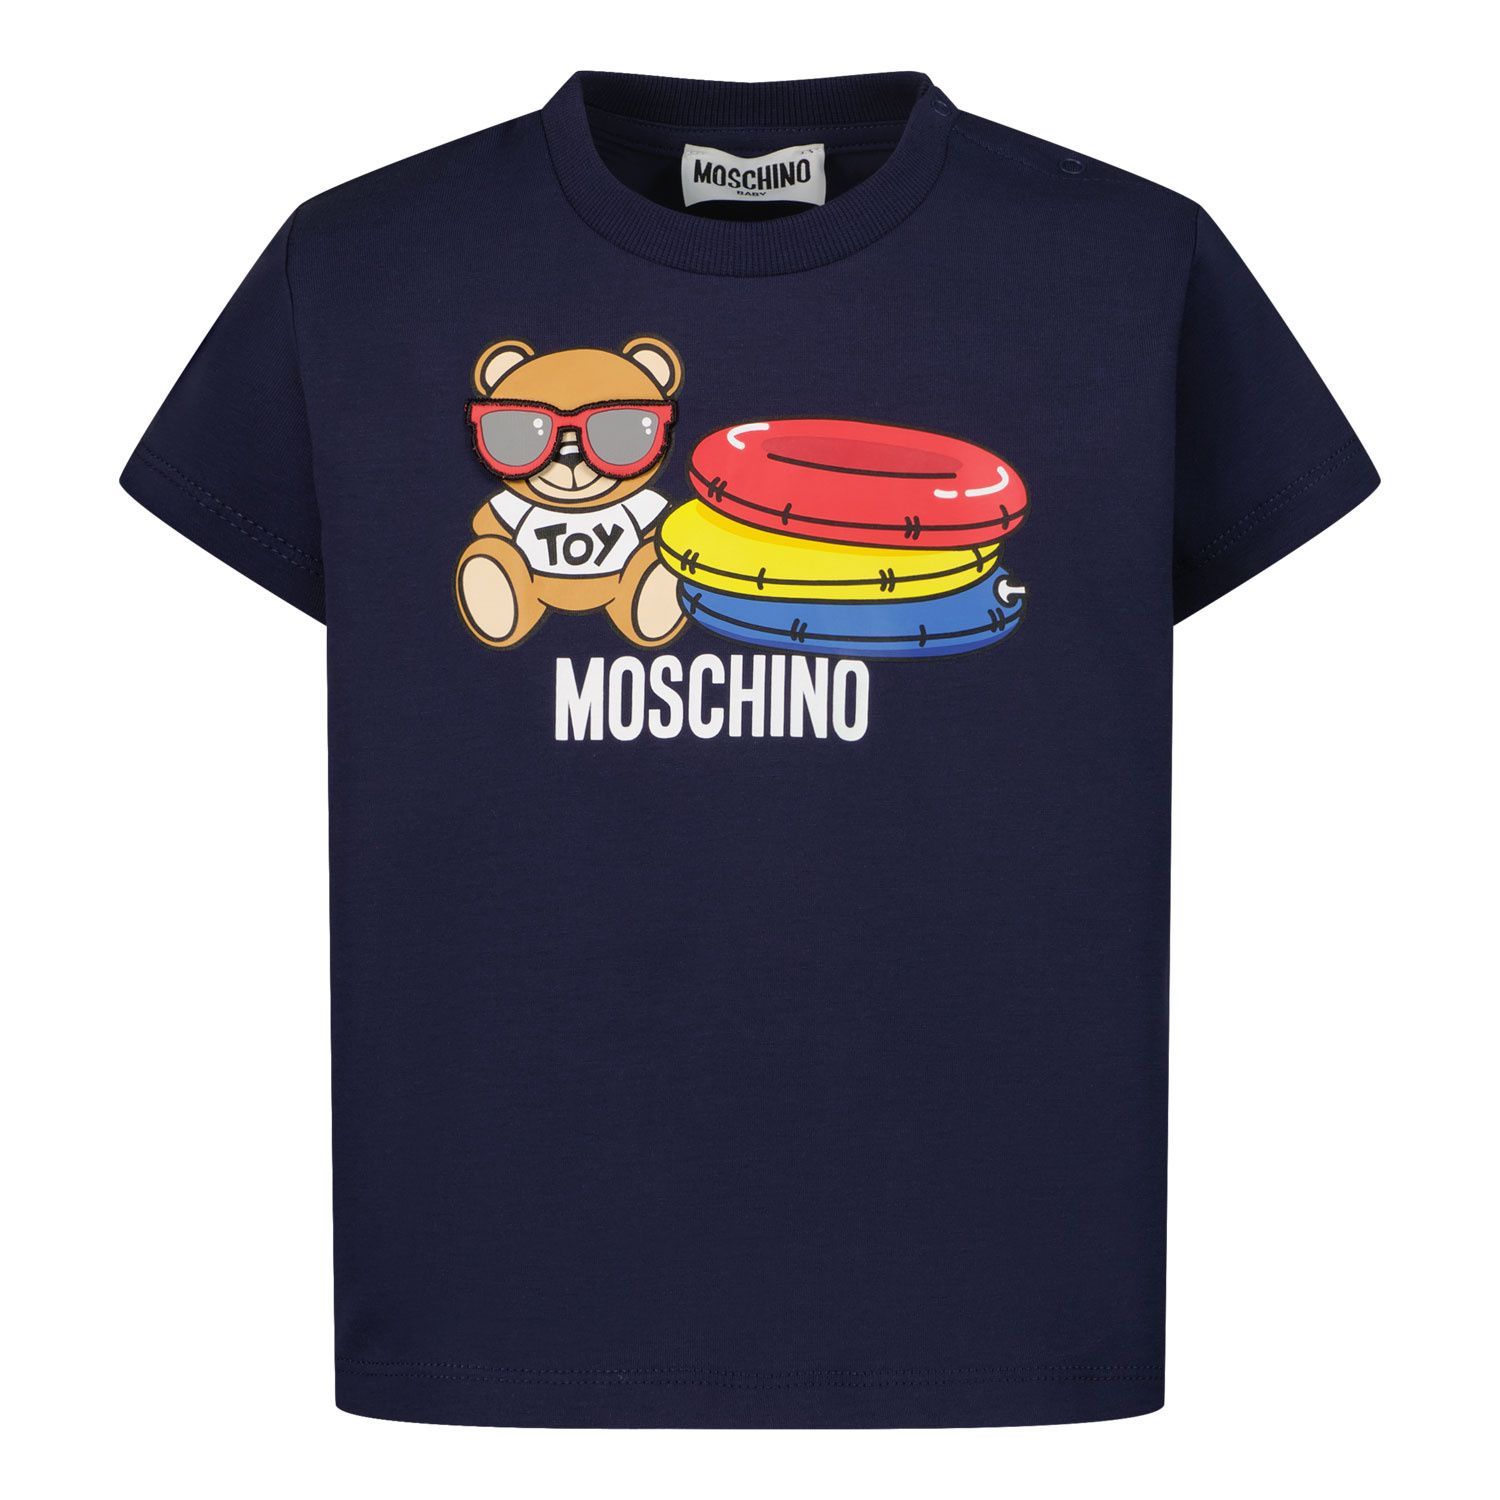 Afbeelding van Moschino MOM02R baby t-shirt navy